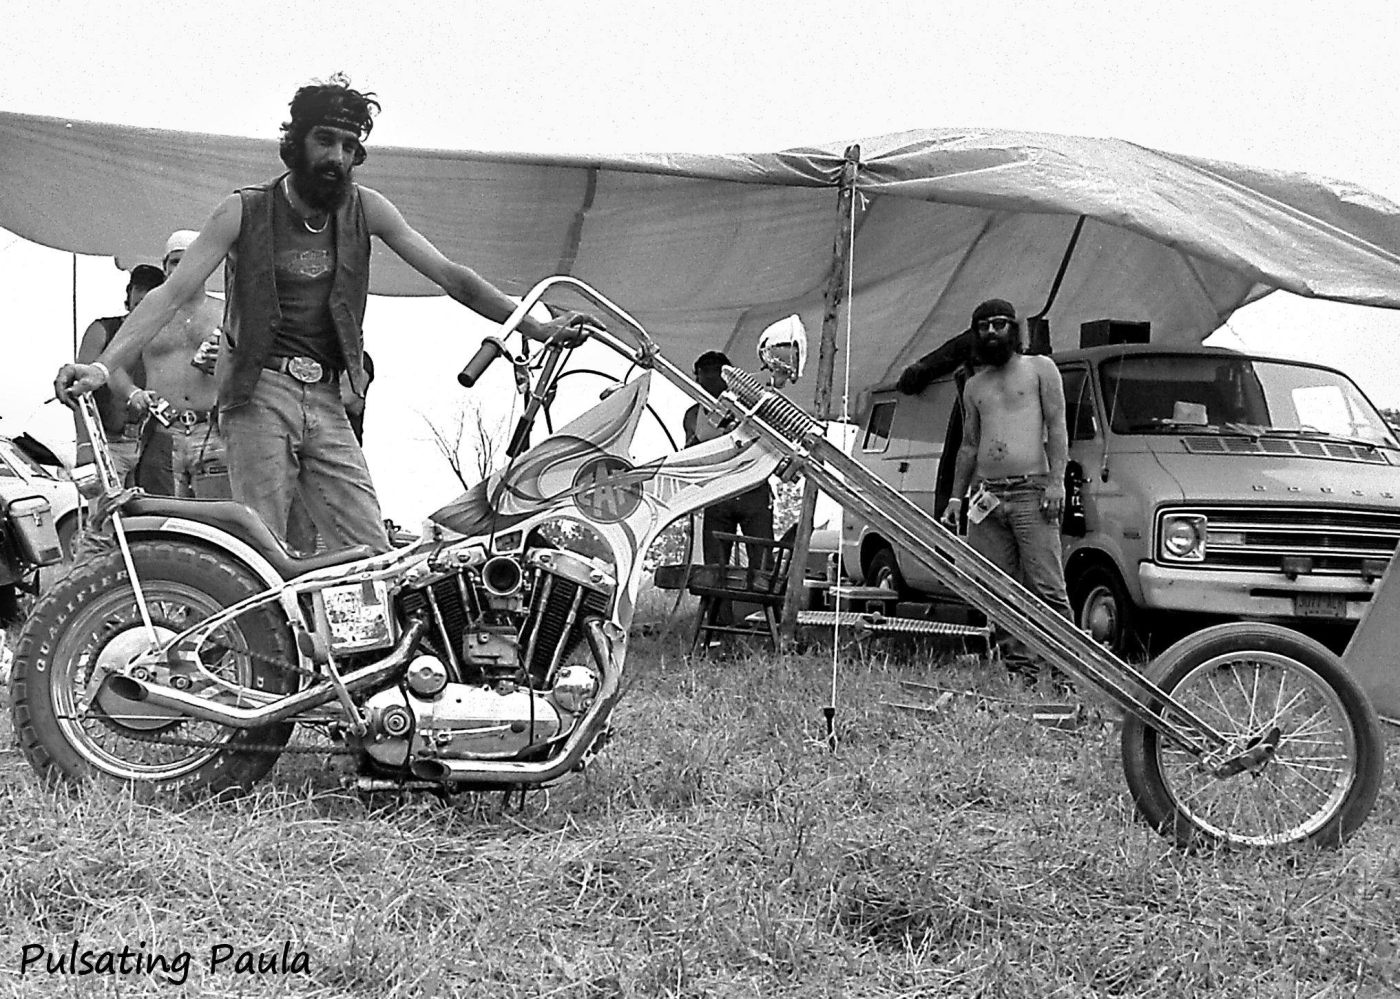 pulsating-paula-1980s-chopper-van-tent-biker-harley.jpg